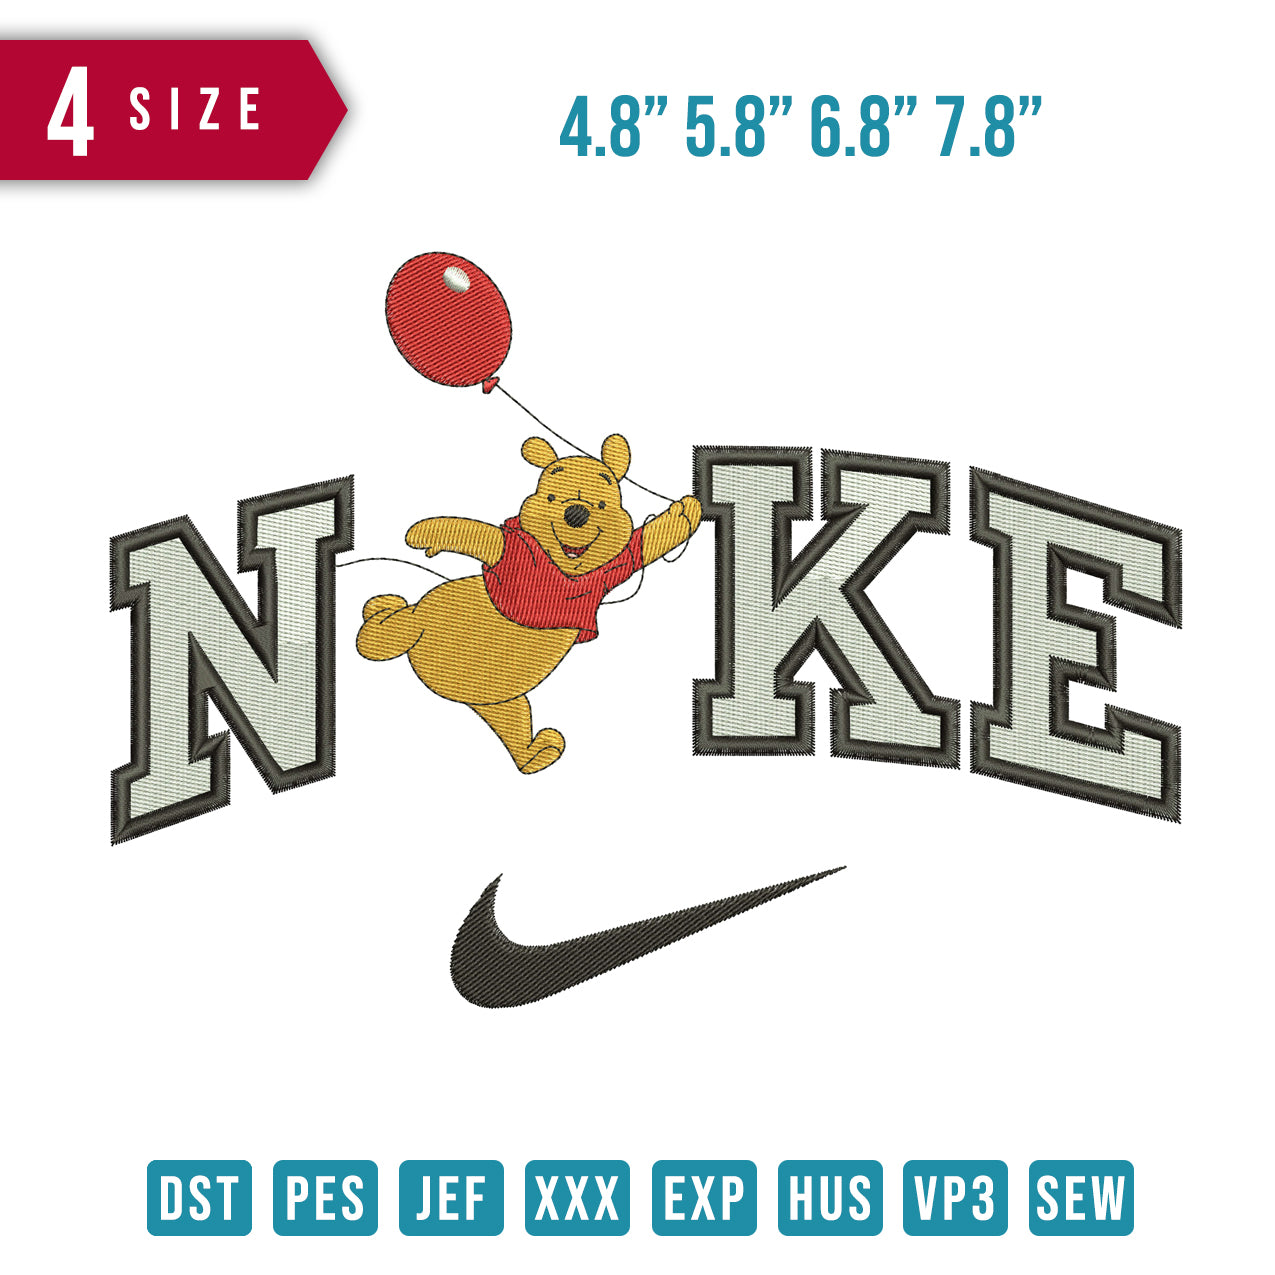 Nike pooh Balloon – Embrobuy